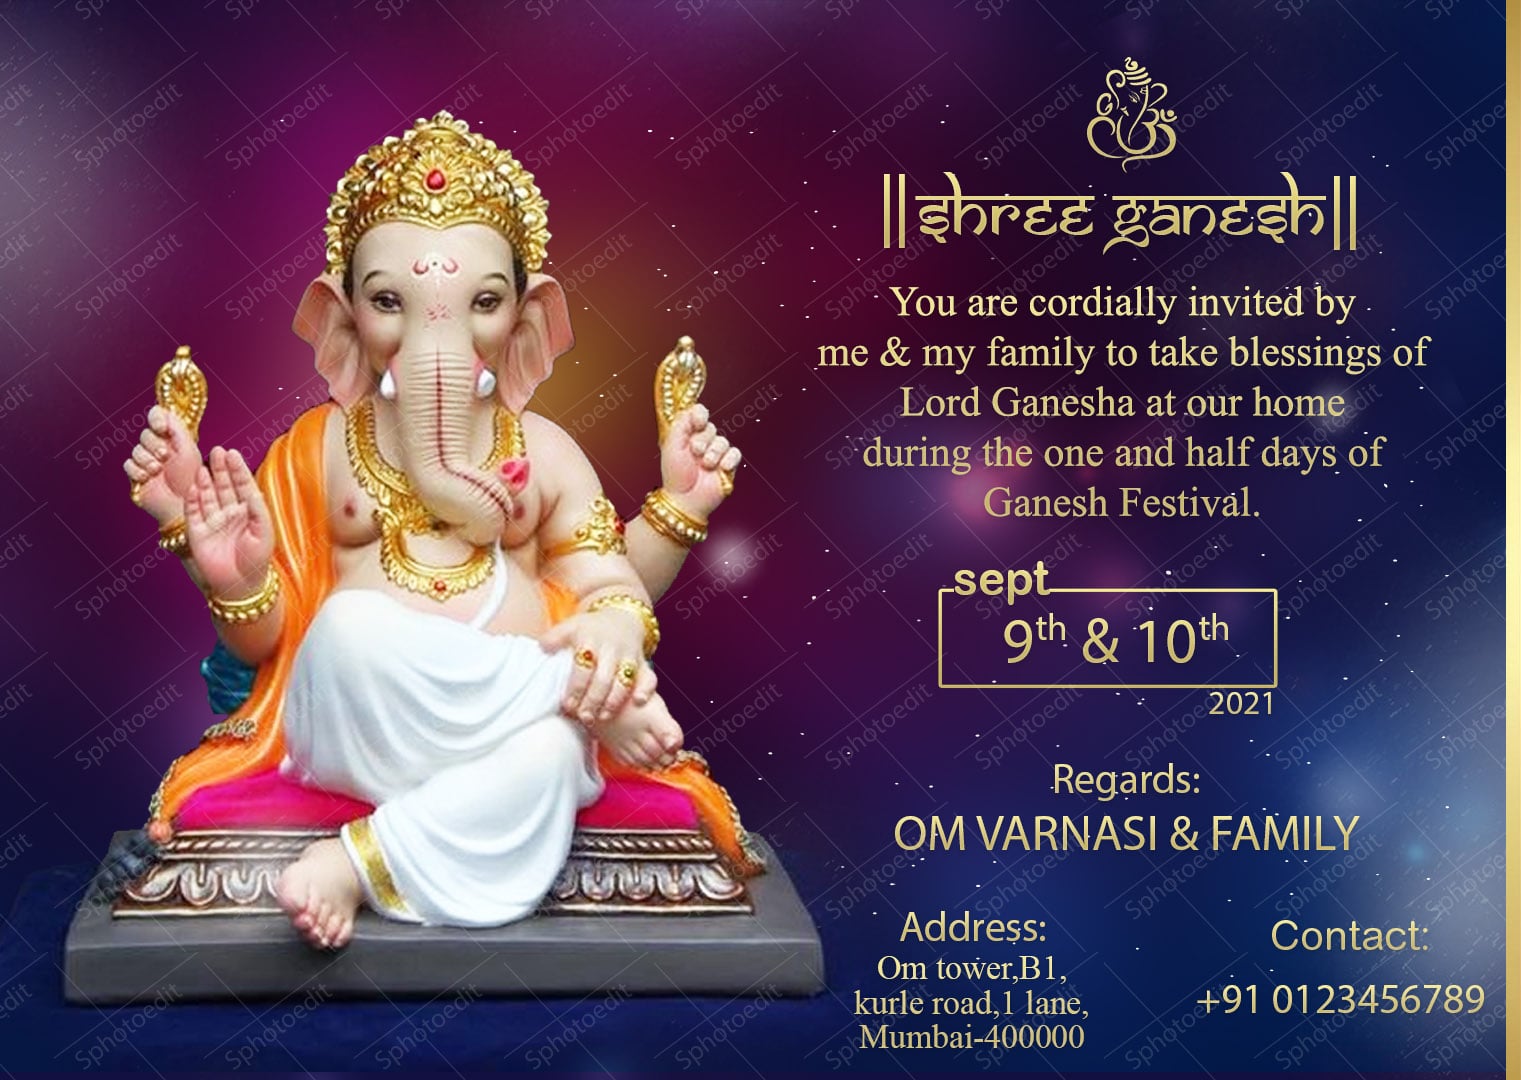 O My Lord Ganesha | Online invite